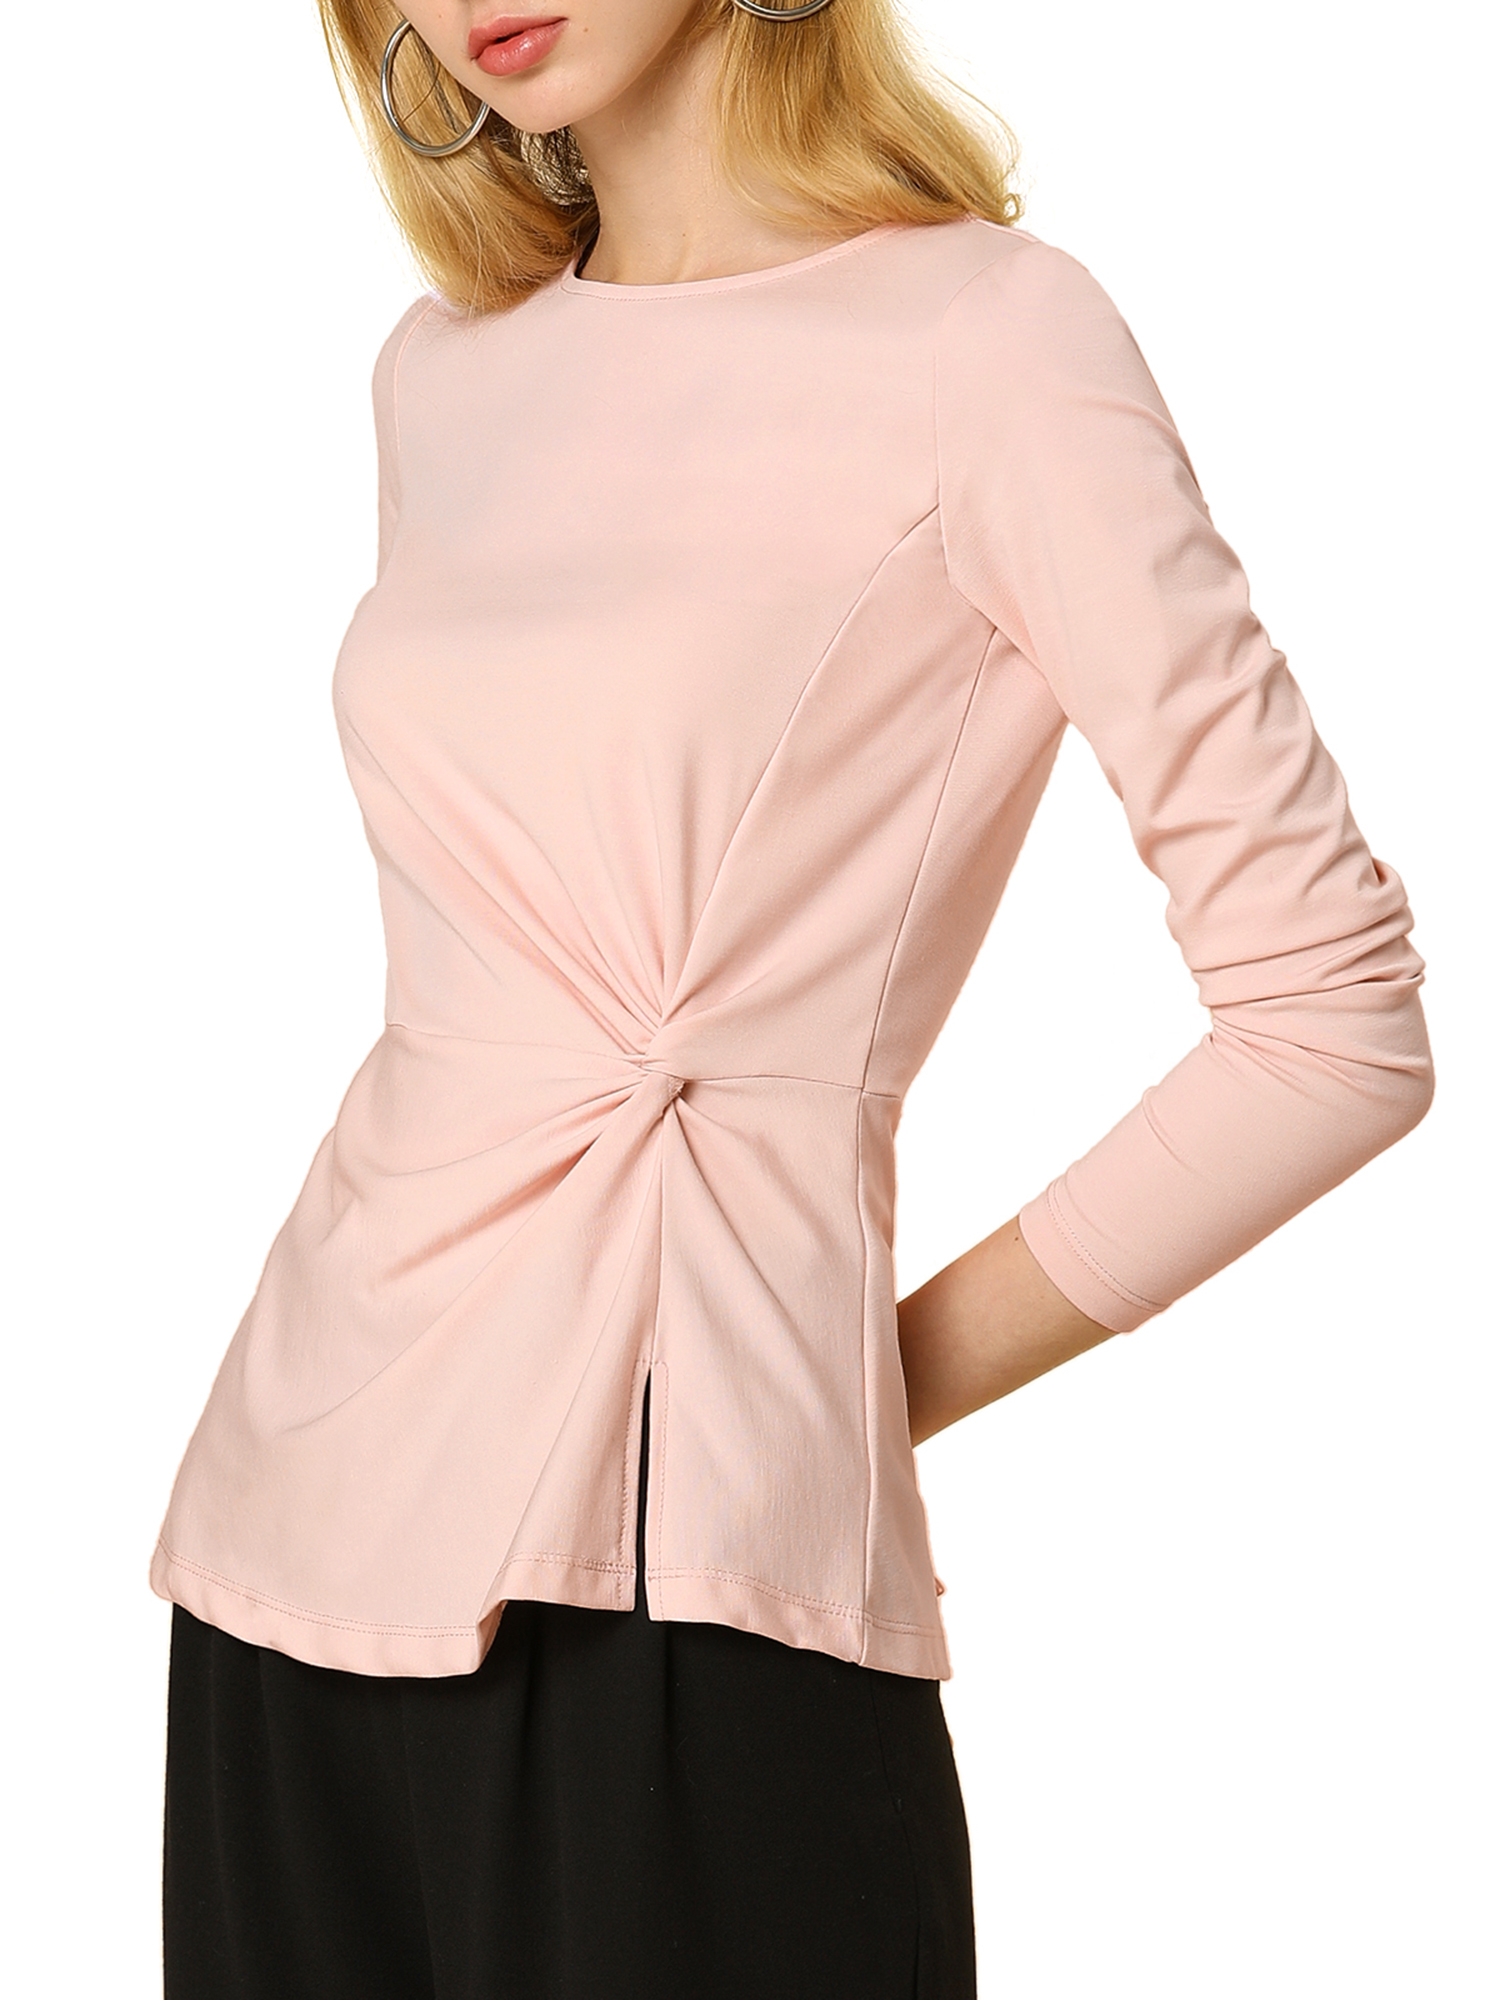 MODA NOVA Junior's Round Neck Tops Long Sleeve Blouse Shirt Pink M - image 4 of 6